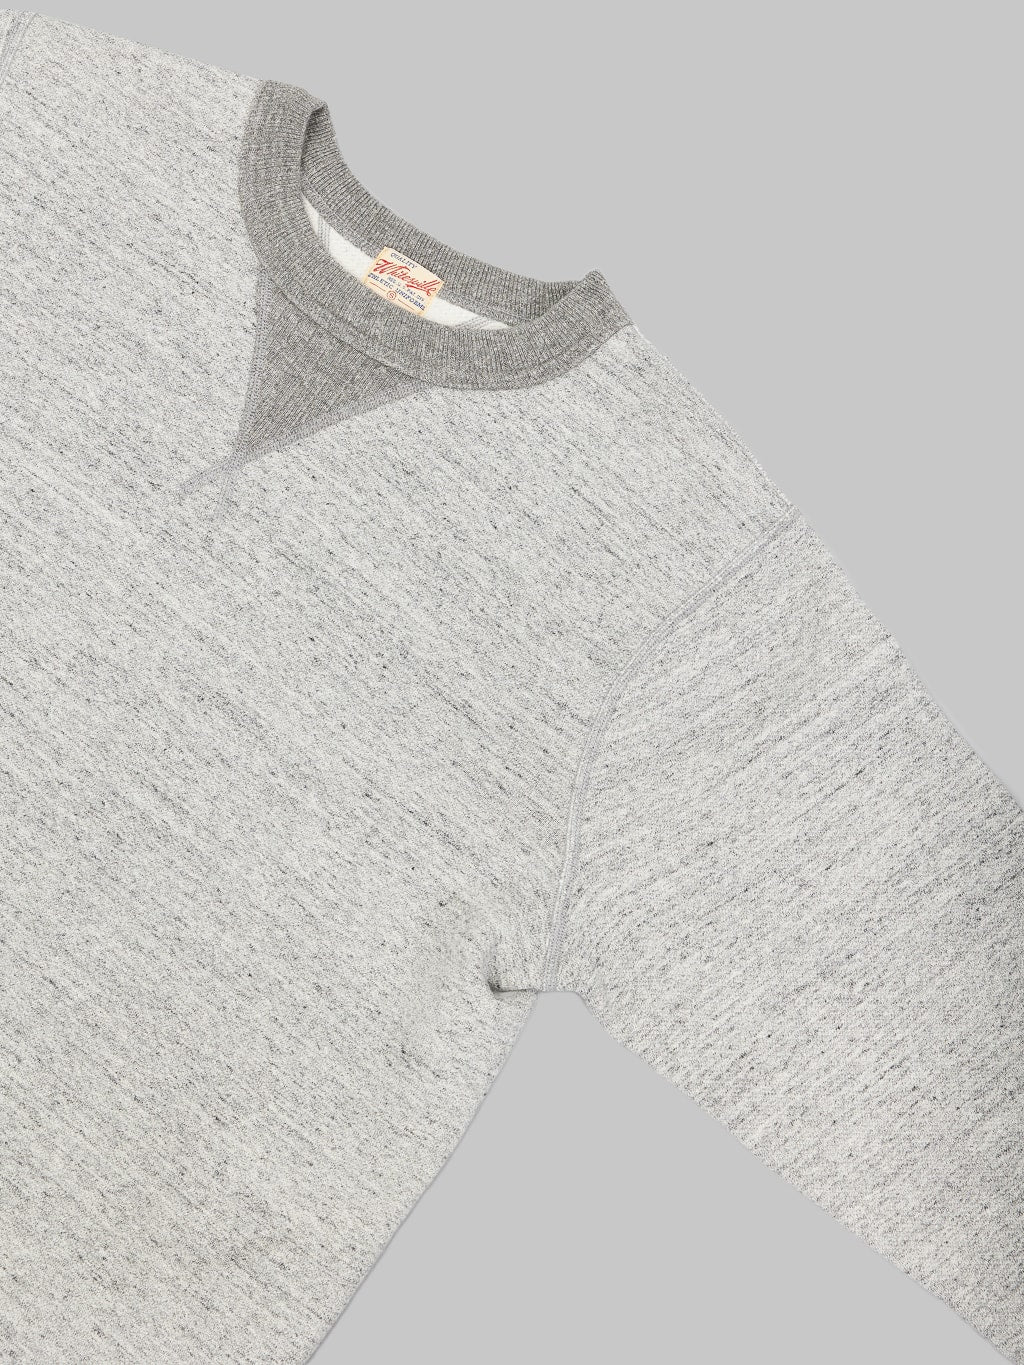 Whitesville Loopwheel Sweatshirt heather grey cotton fabric